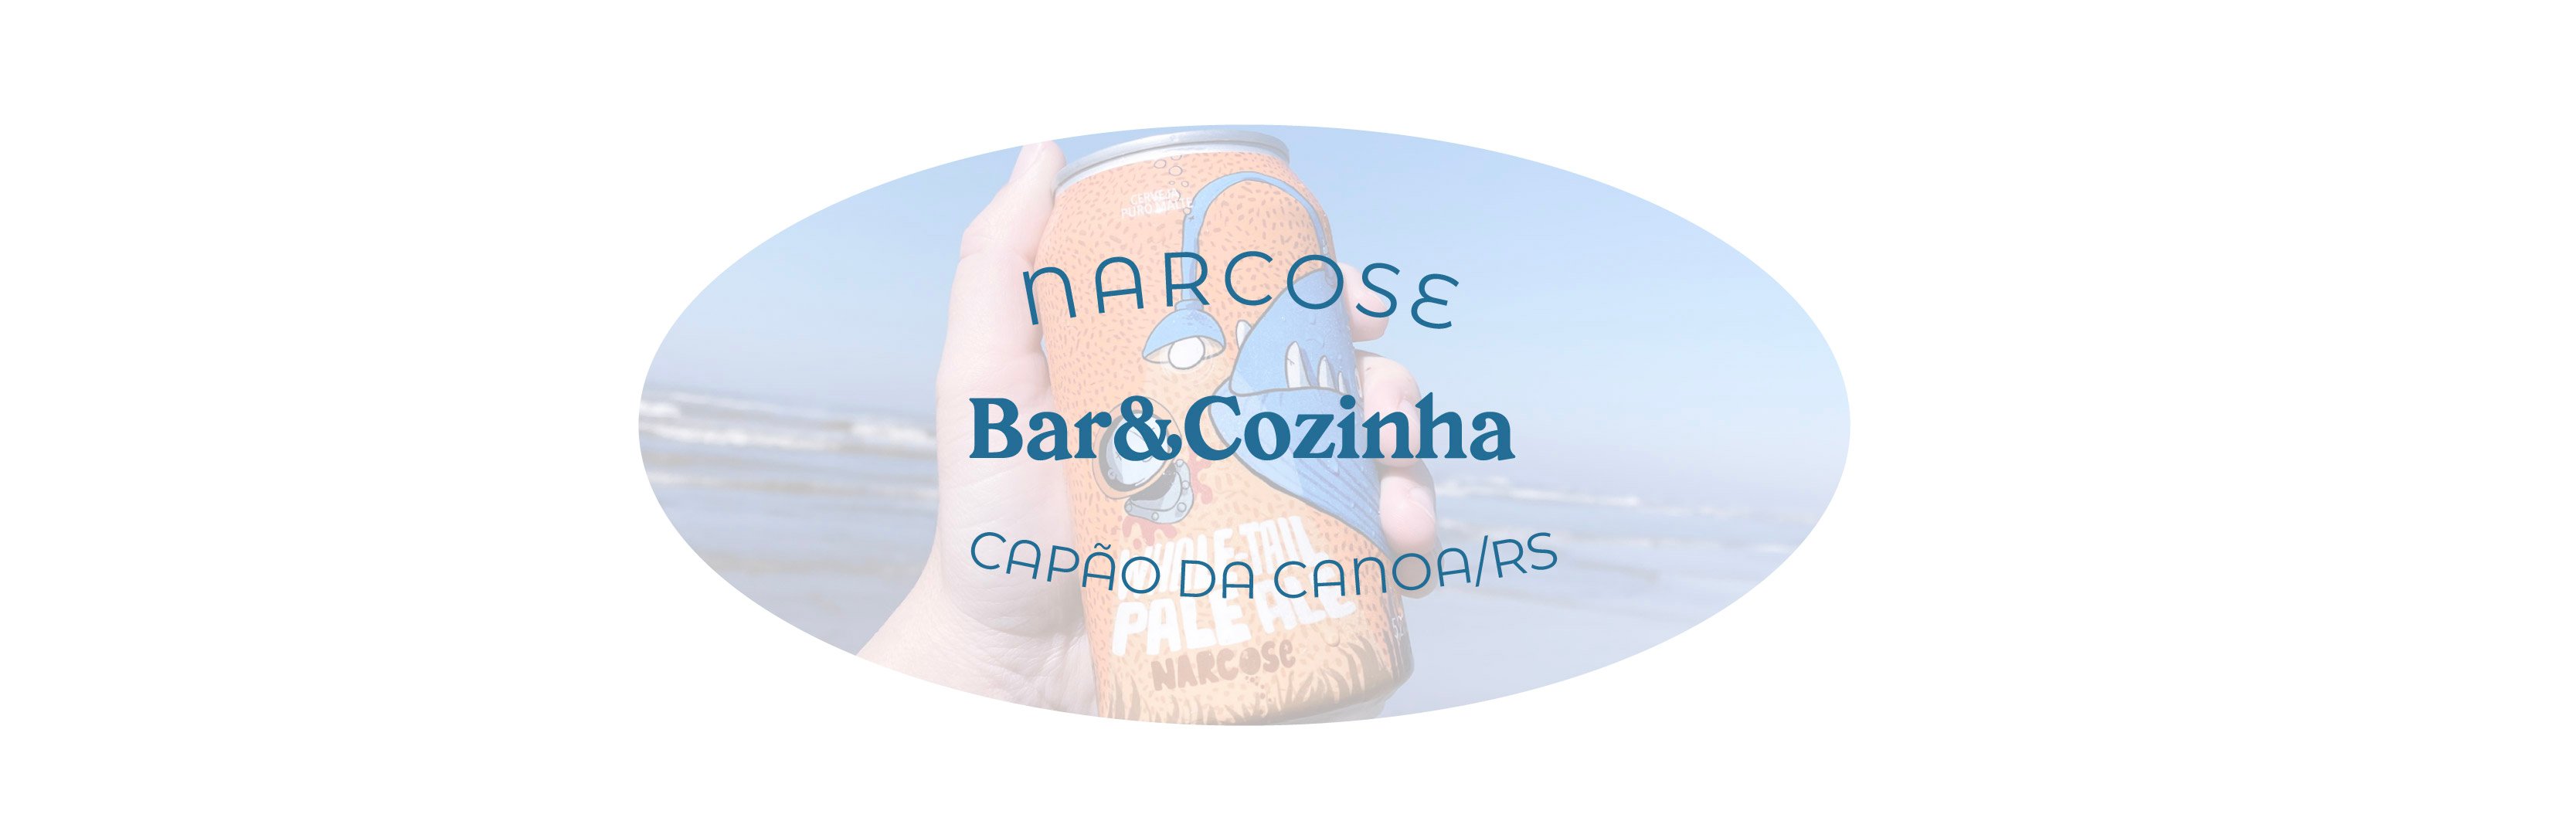 narcose-site-desktop-bar-prancheta-1